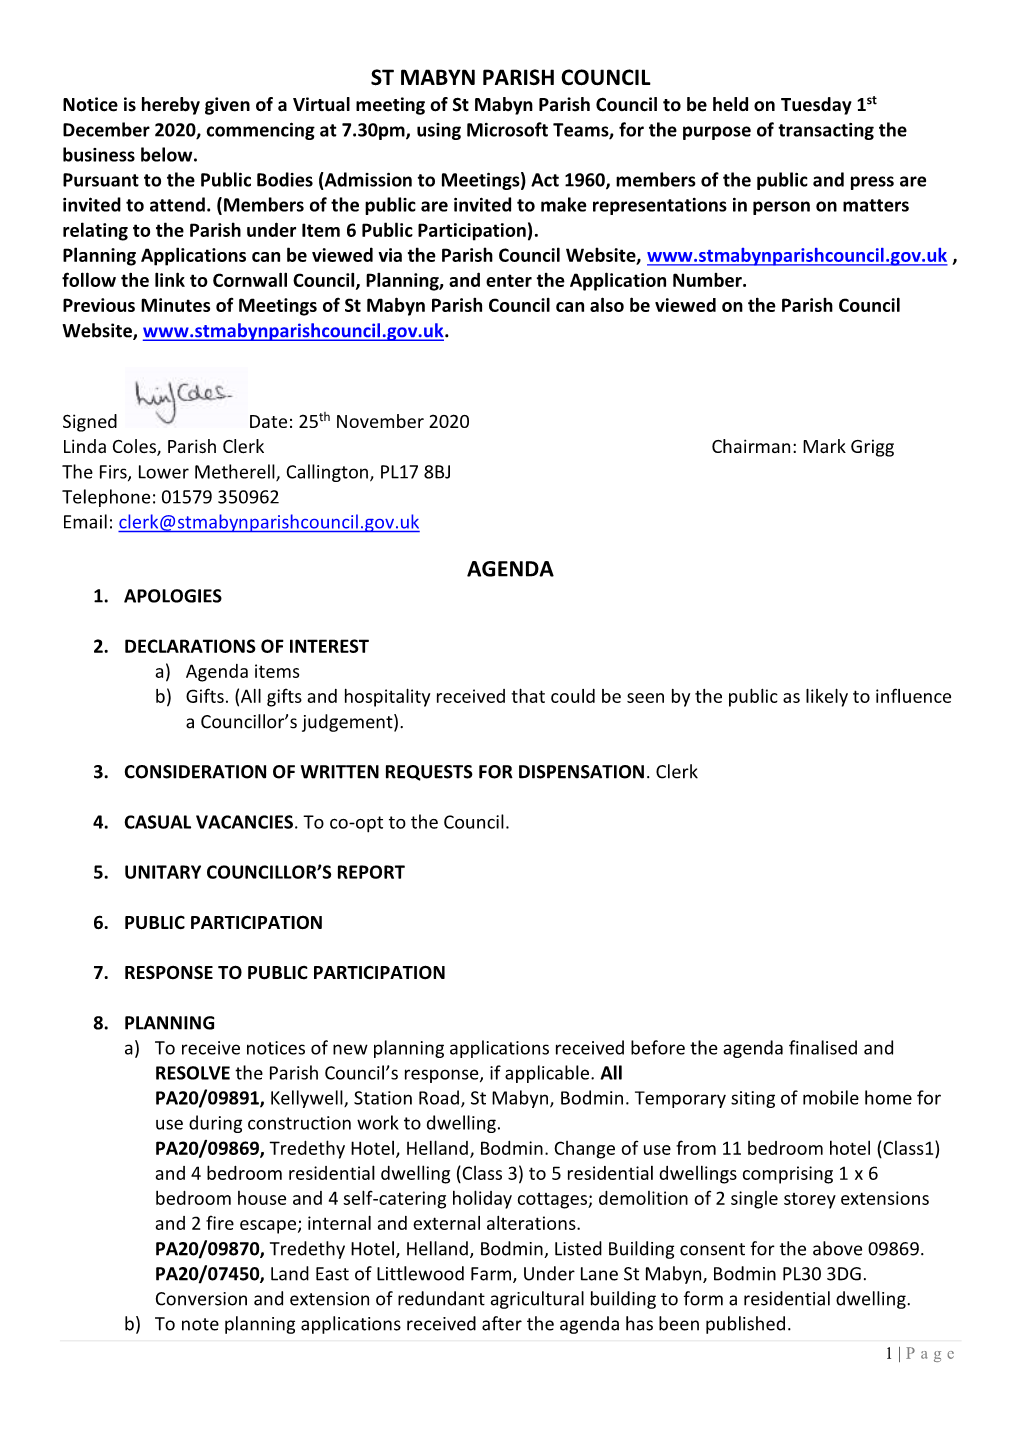 St Mabyn Parish Council Agenda